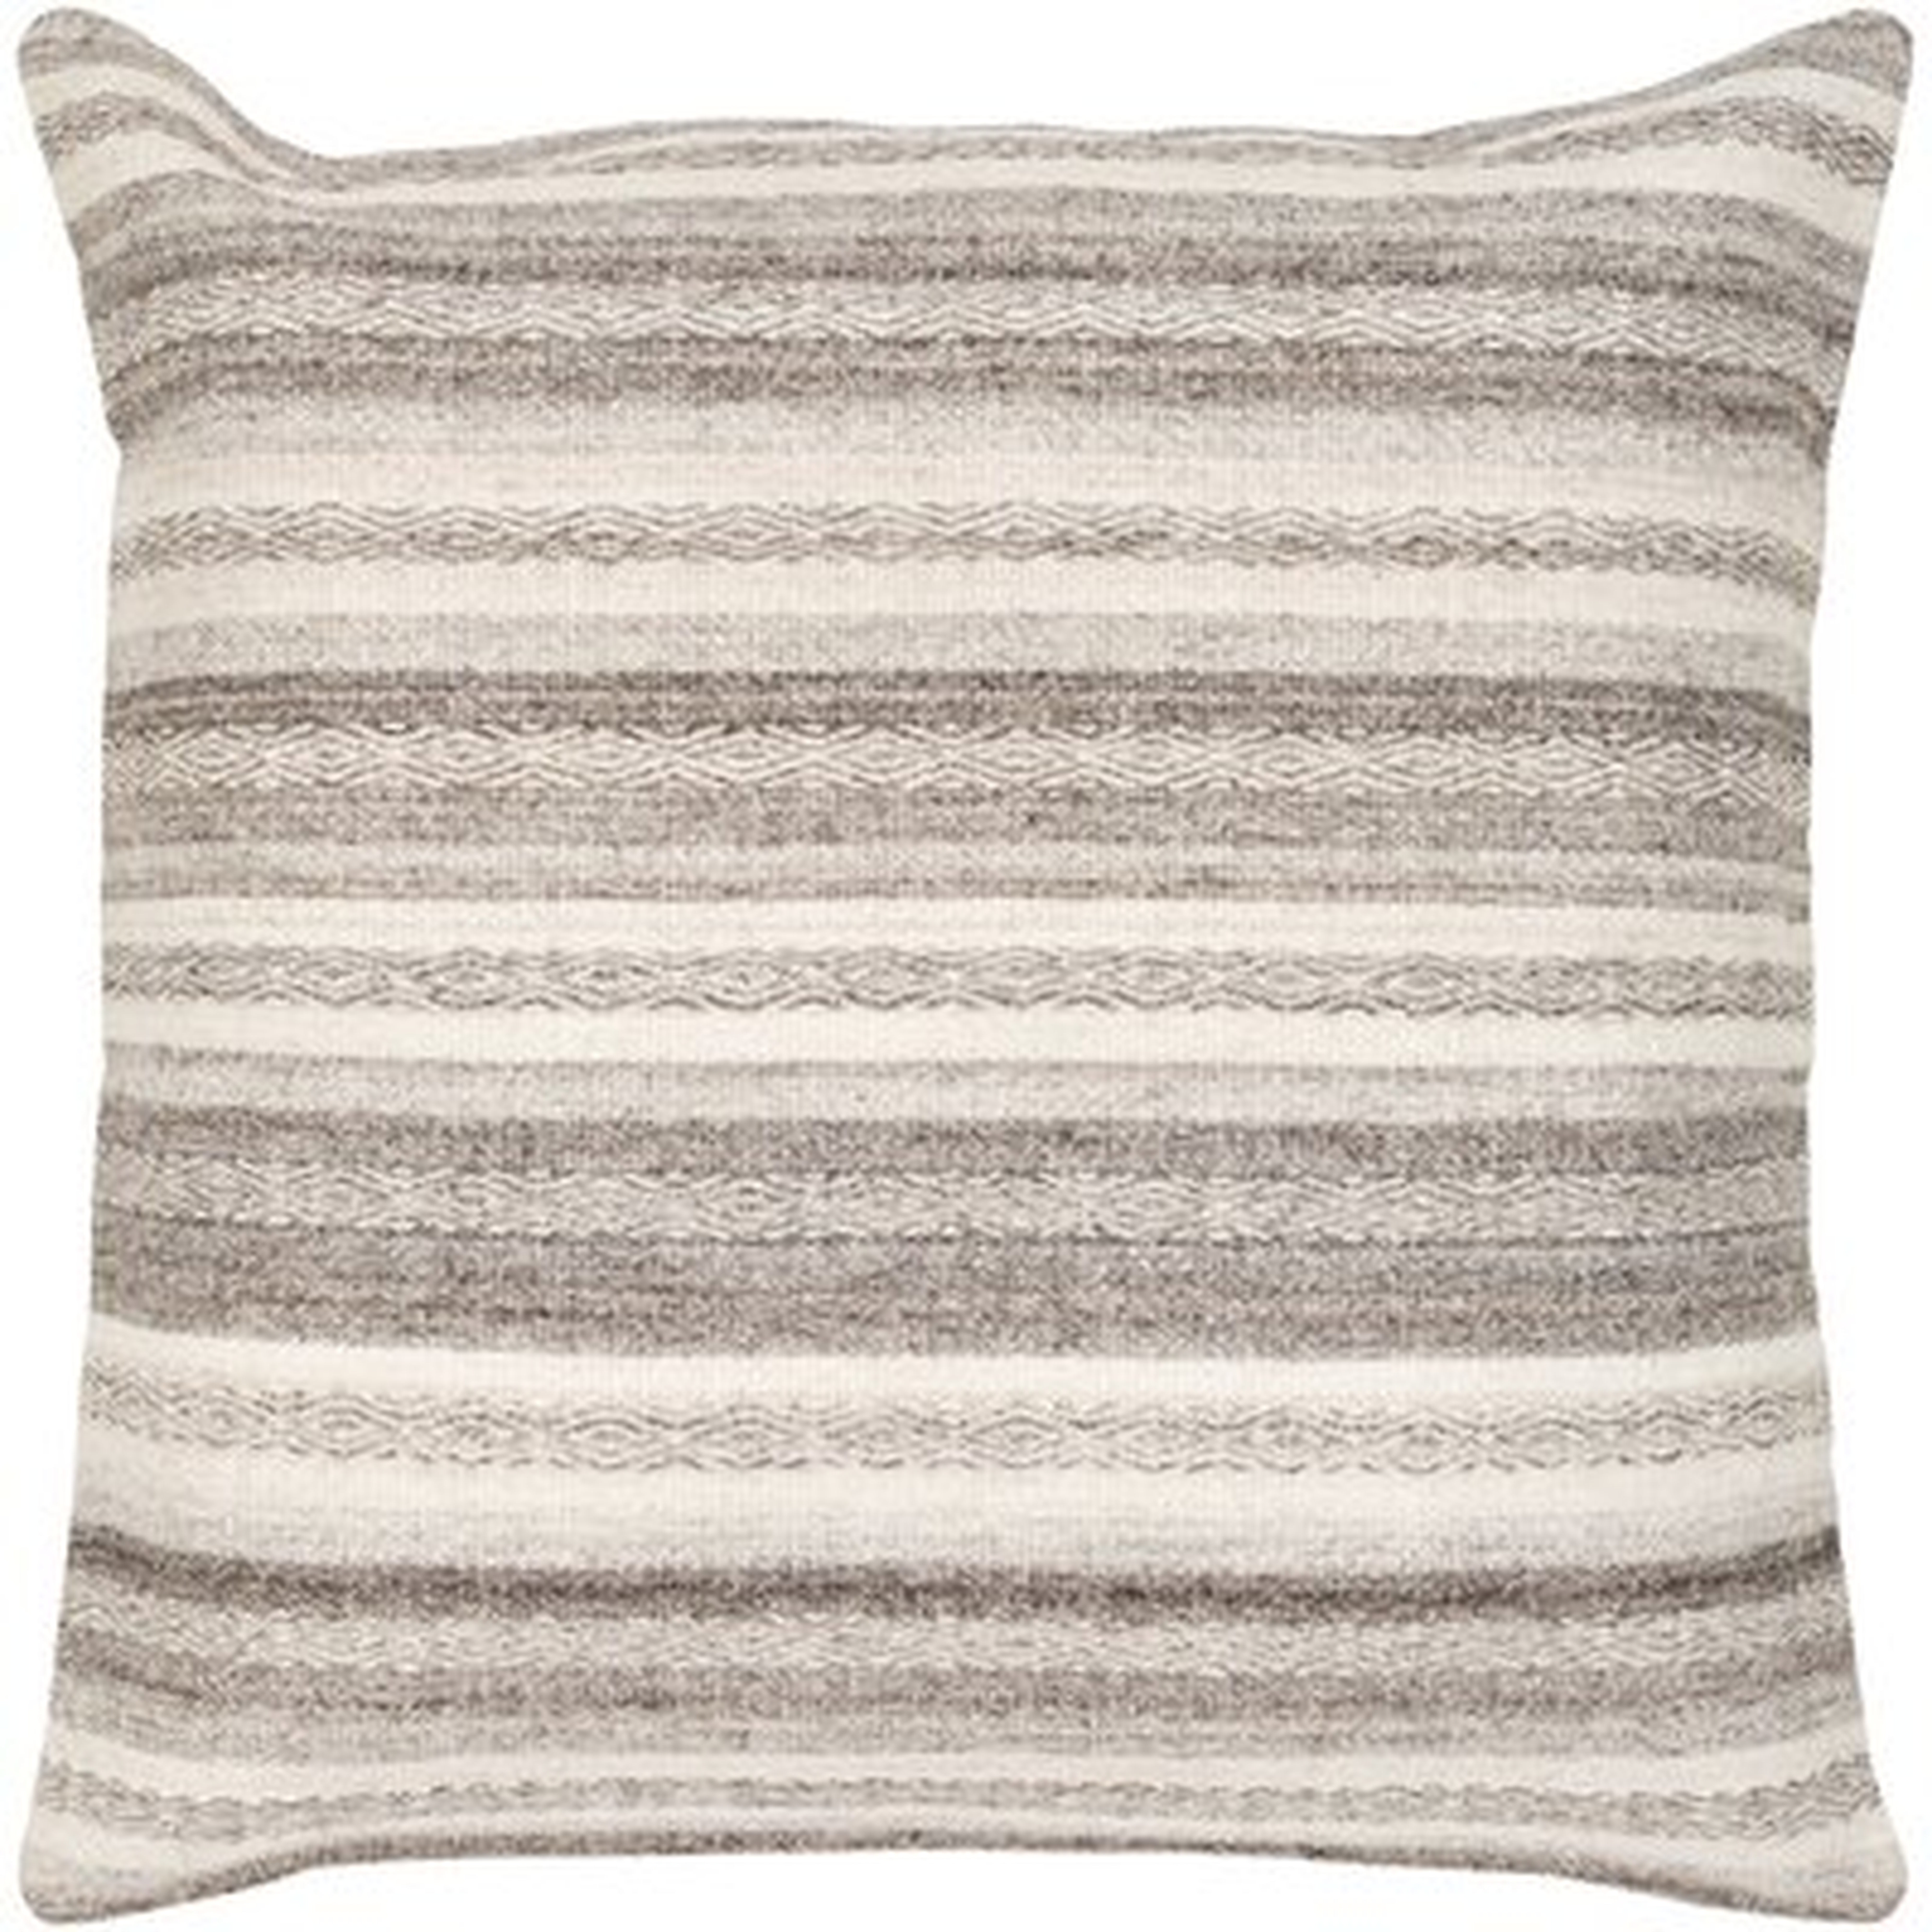 Mccue Square Pillow Cover - Wayfair